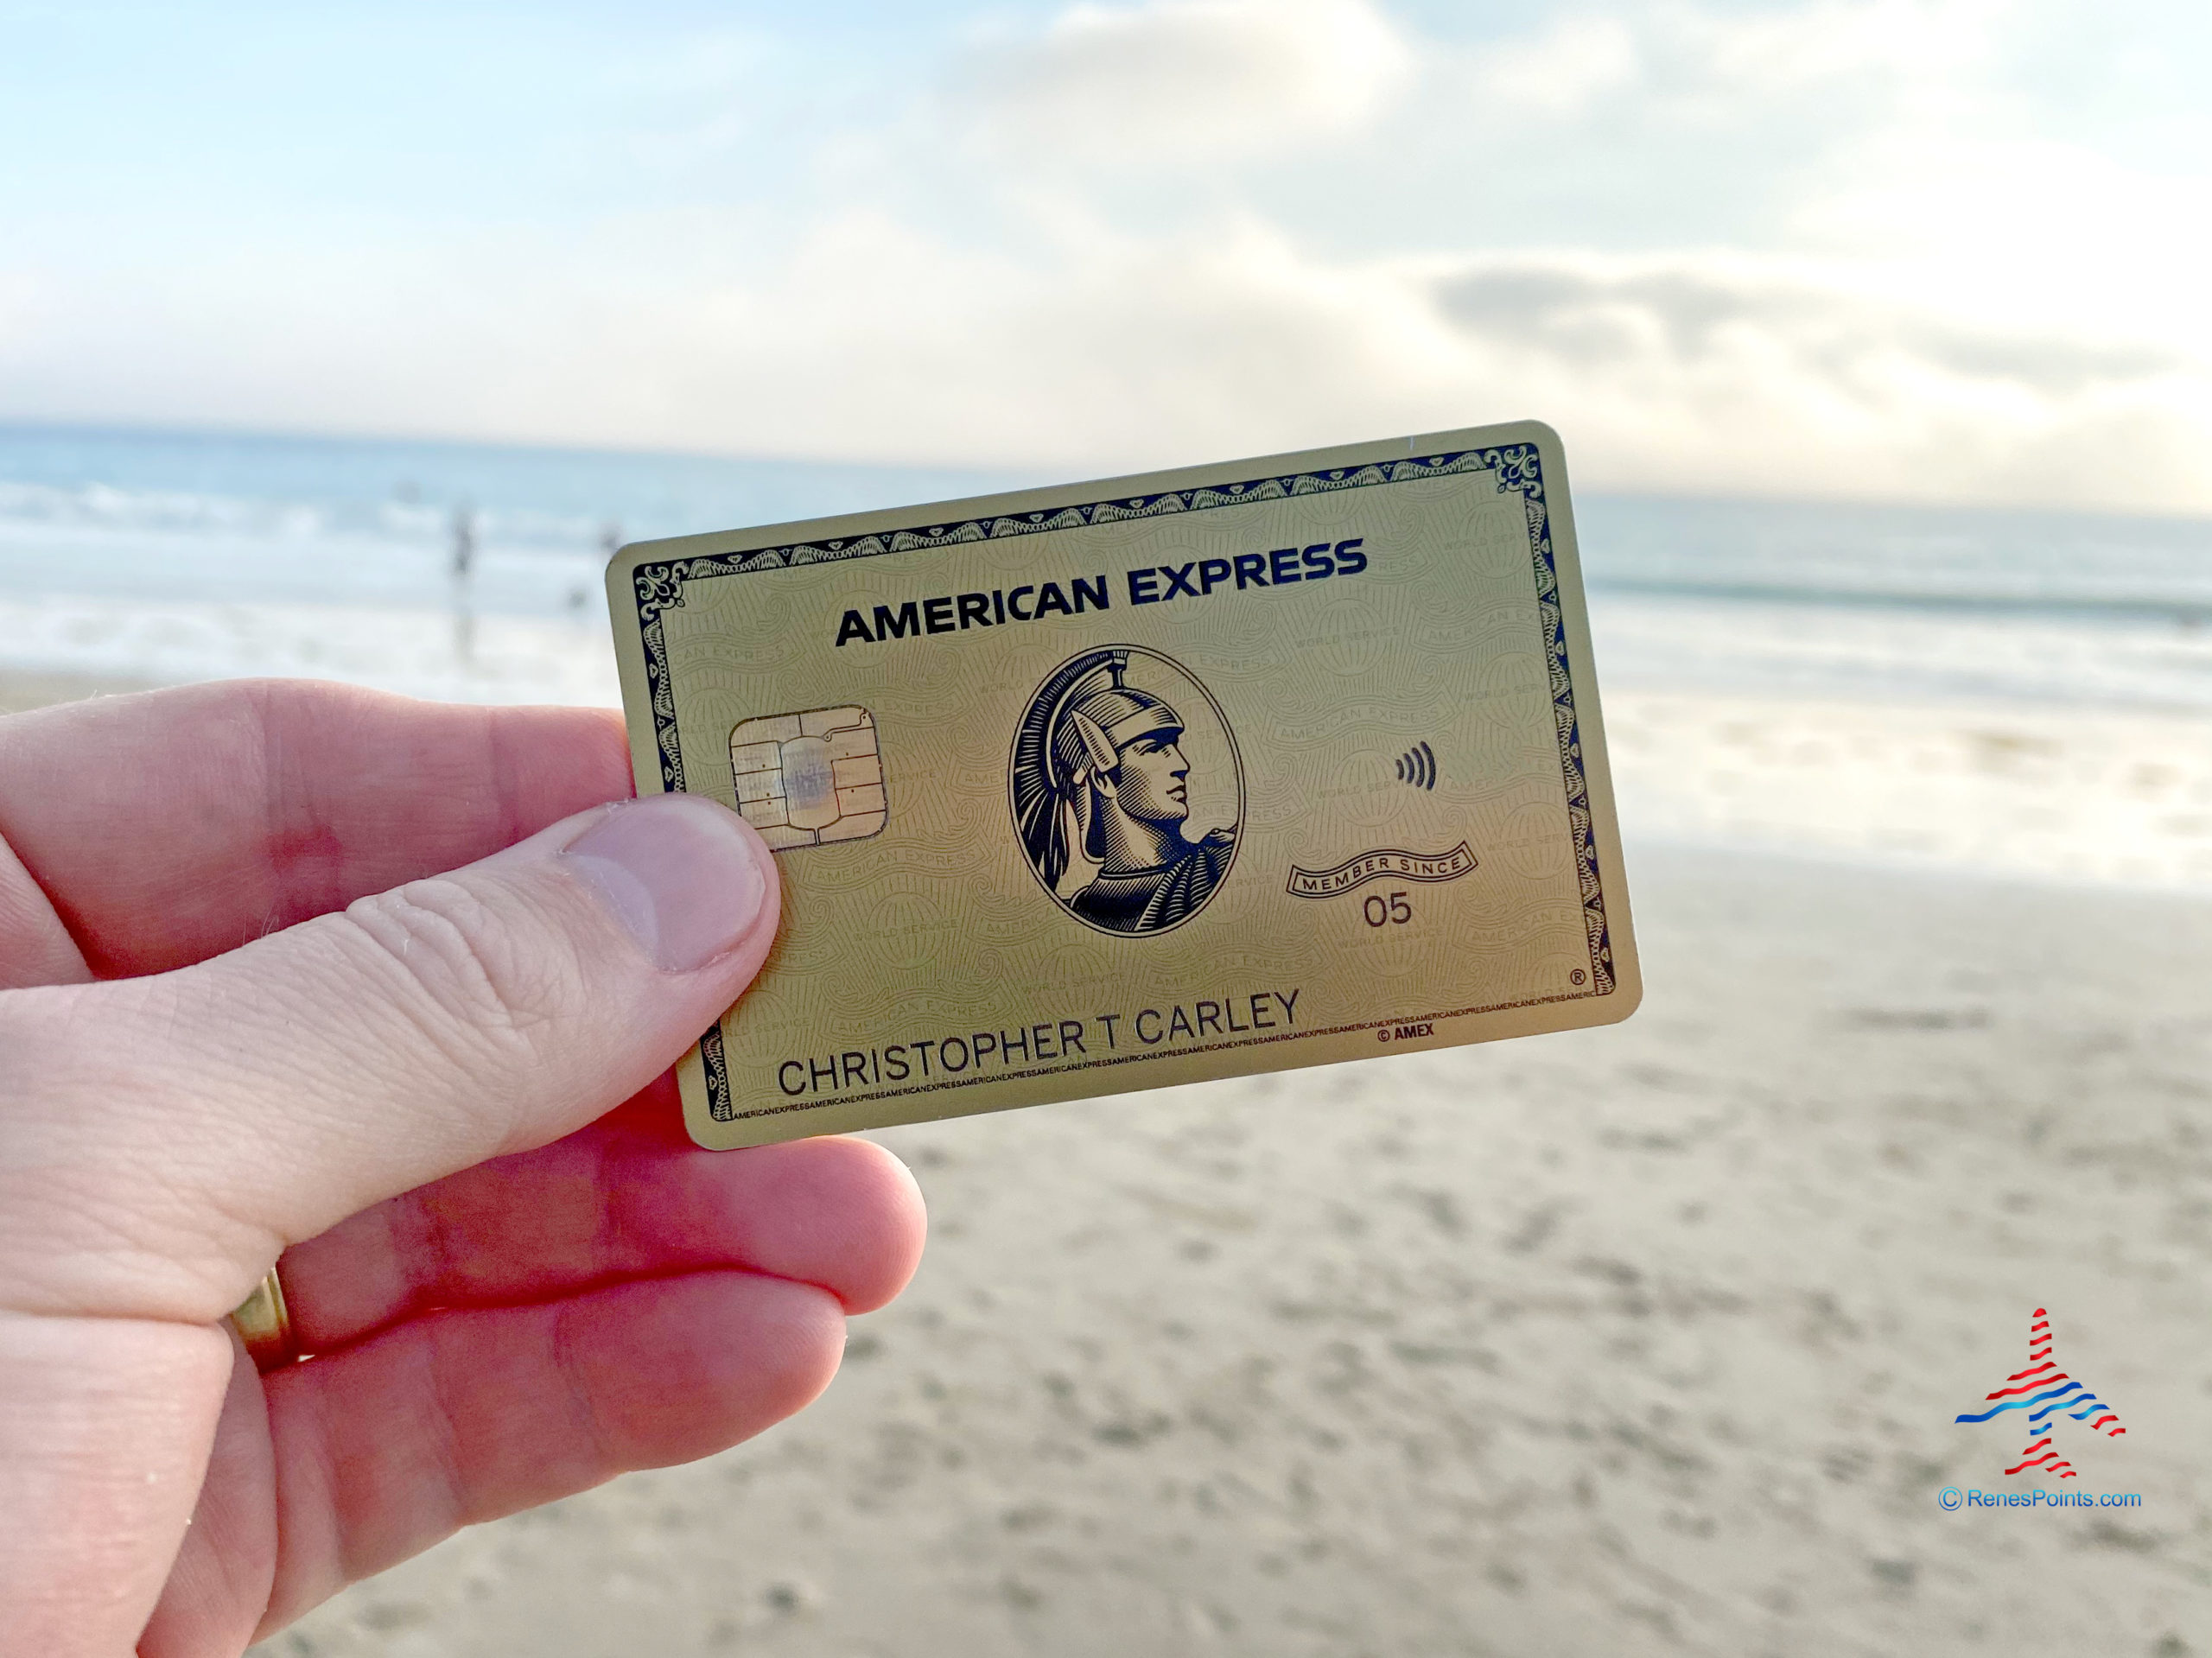 amex gold card travel benefits